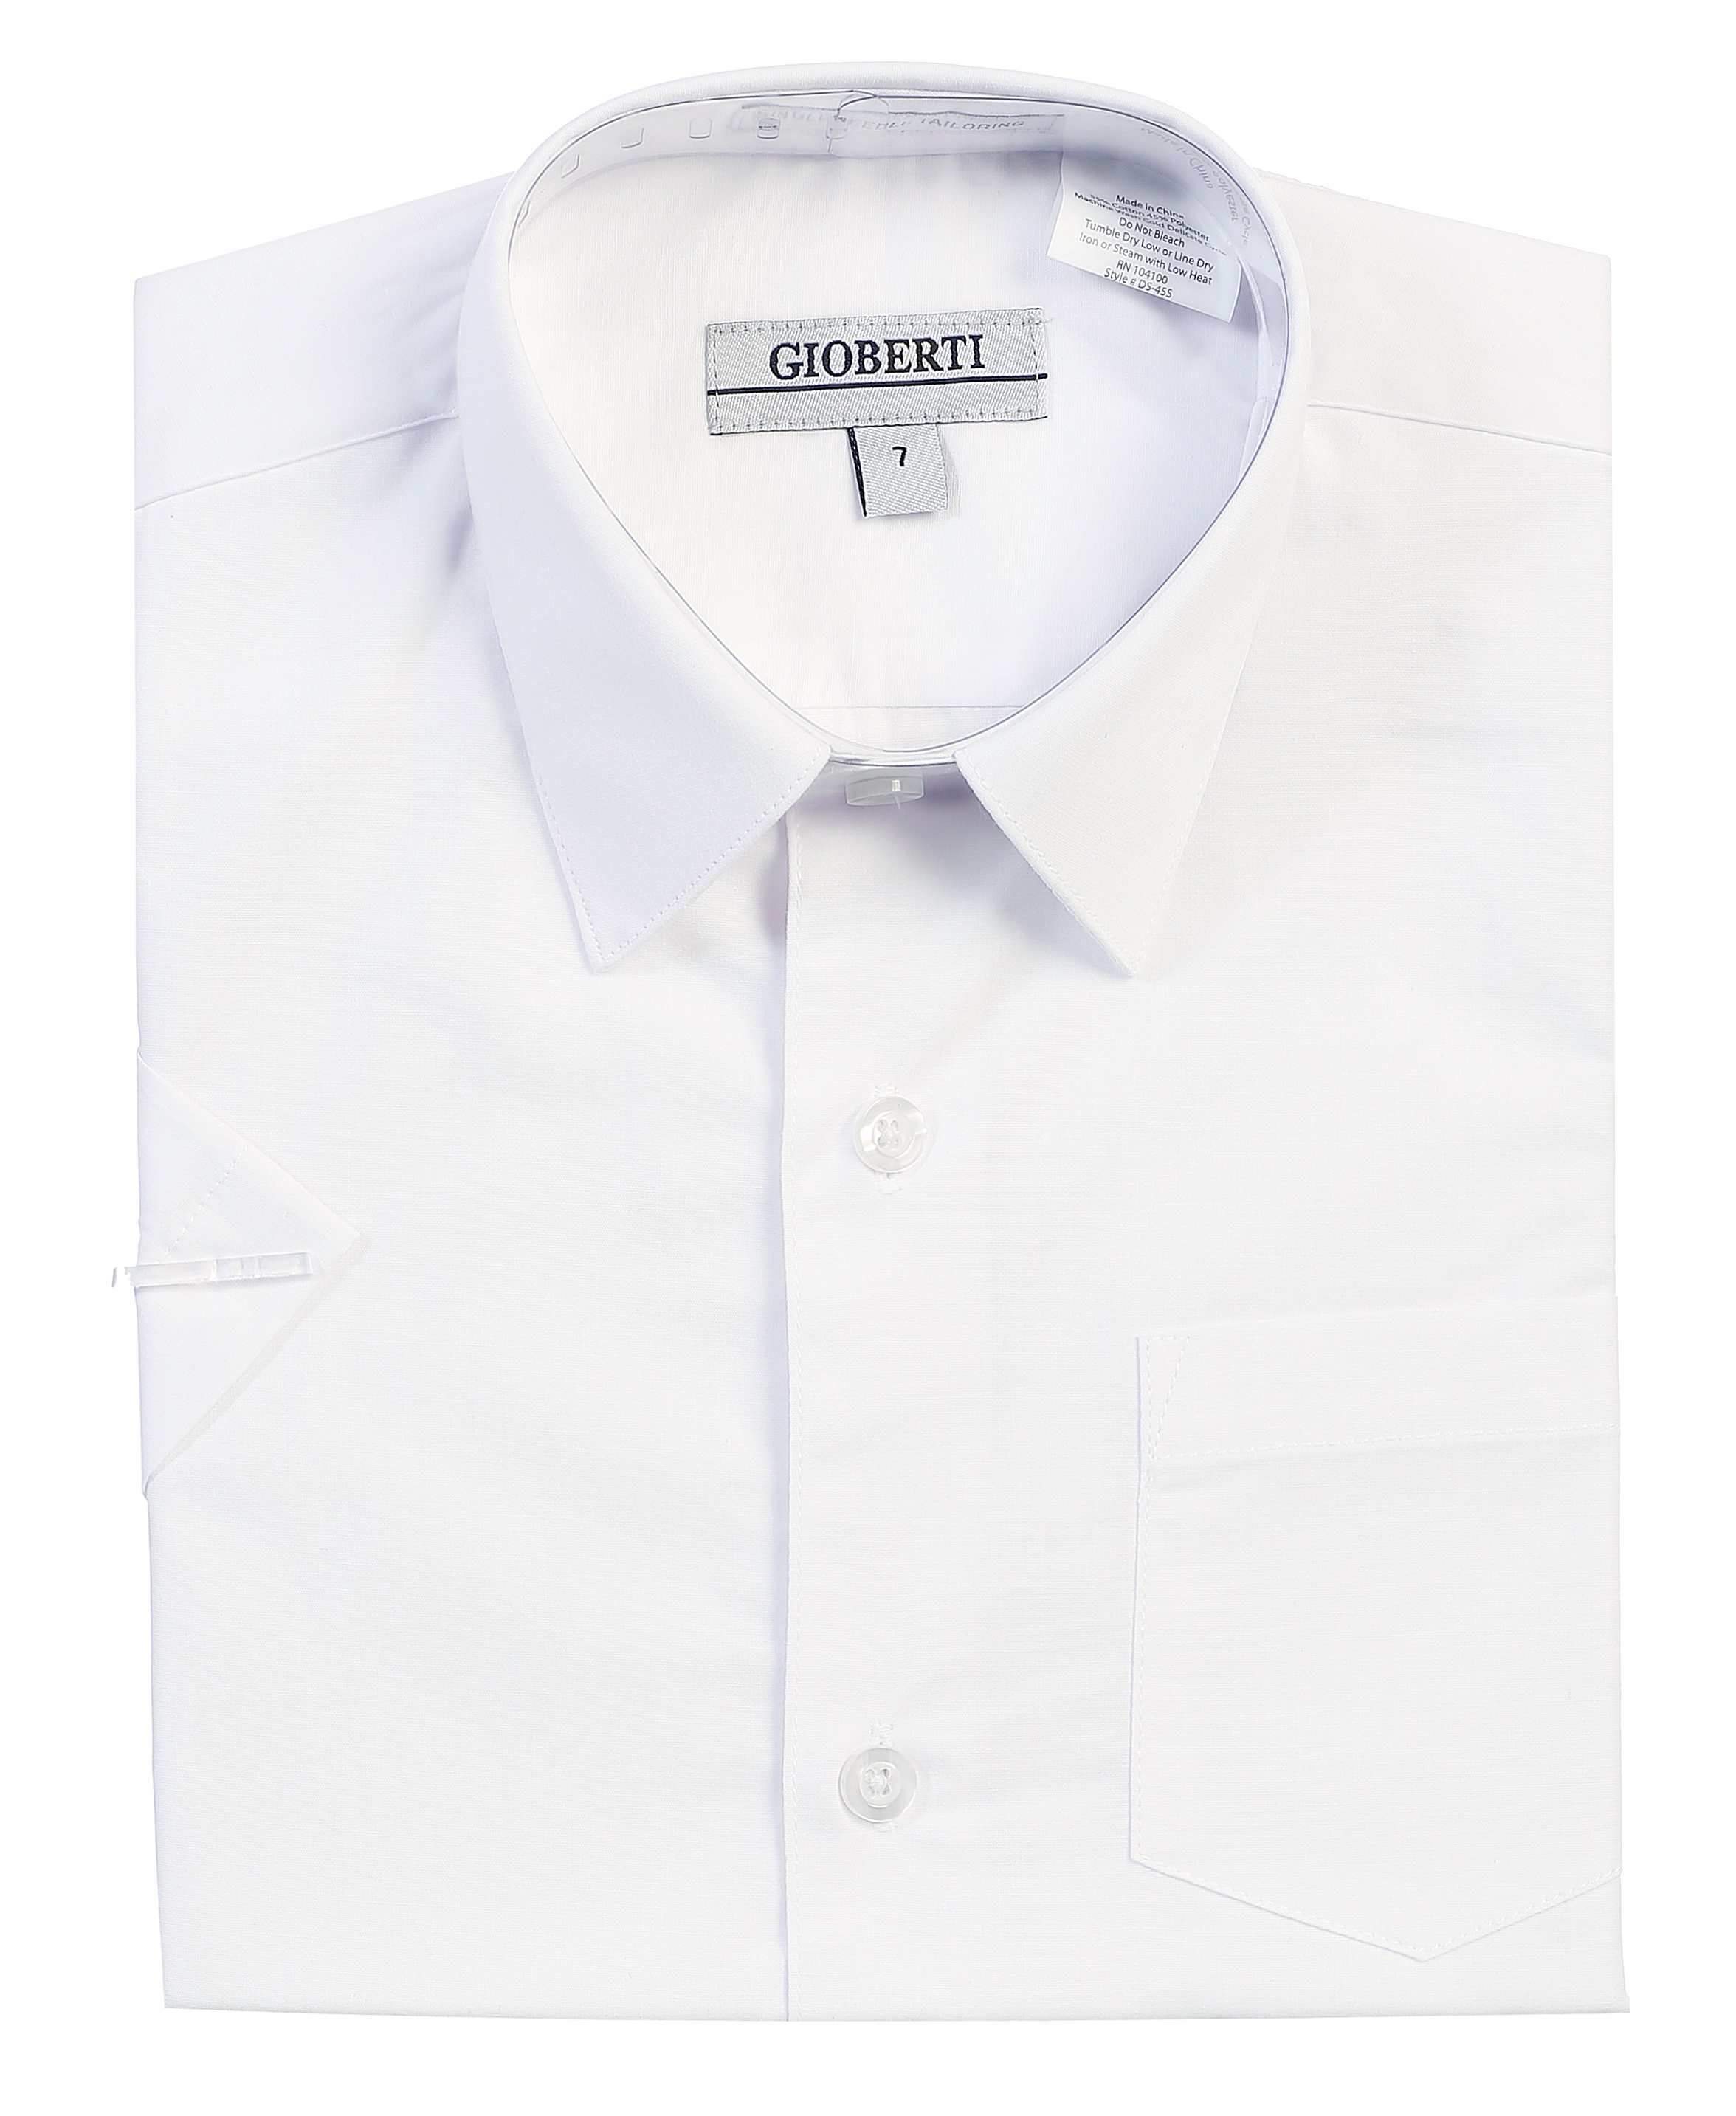 Gioberti Boy's Short Sleeve Solid Dress Shirt - Walmart.com